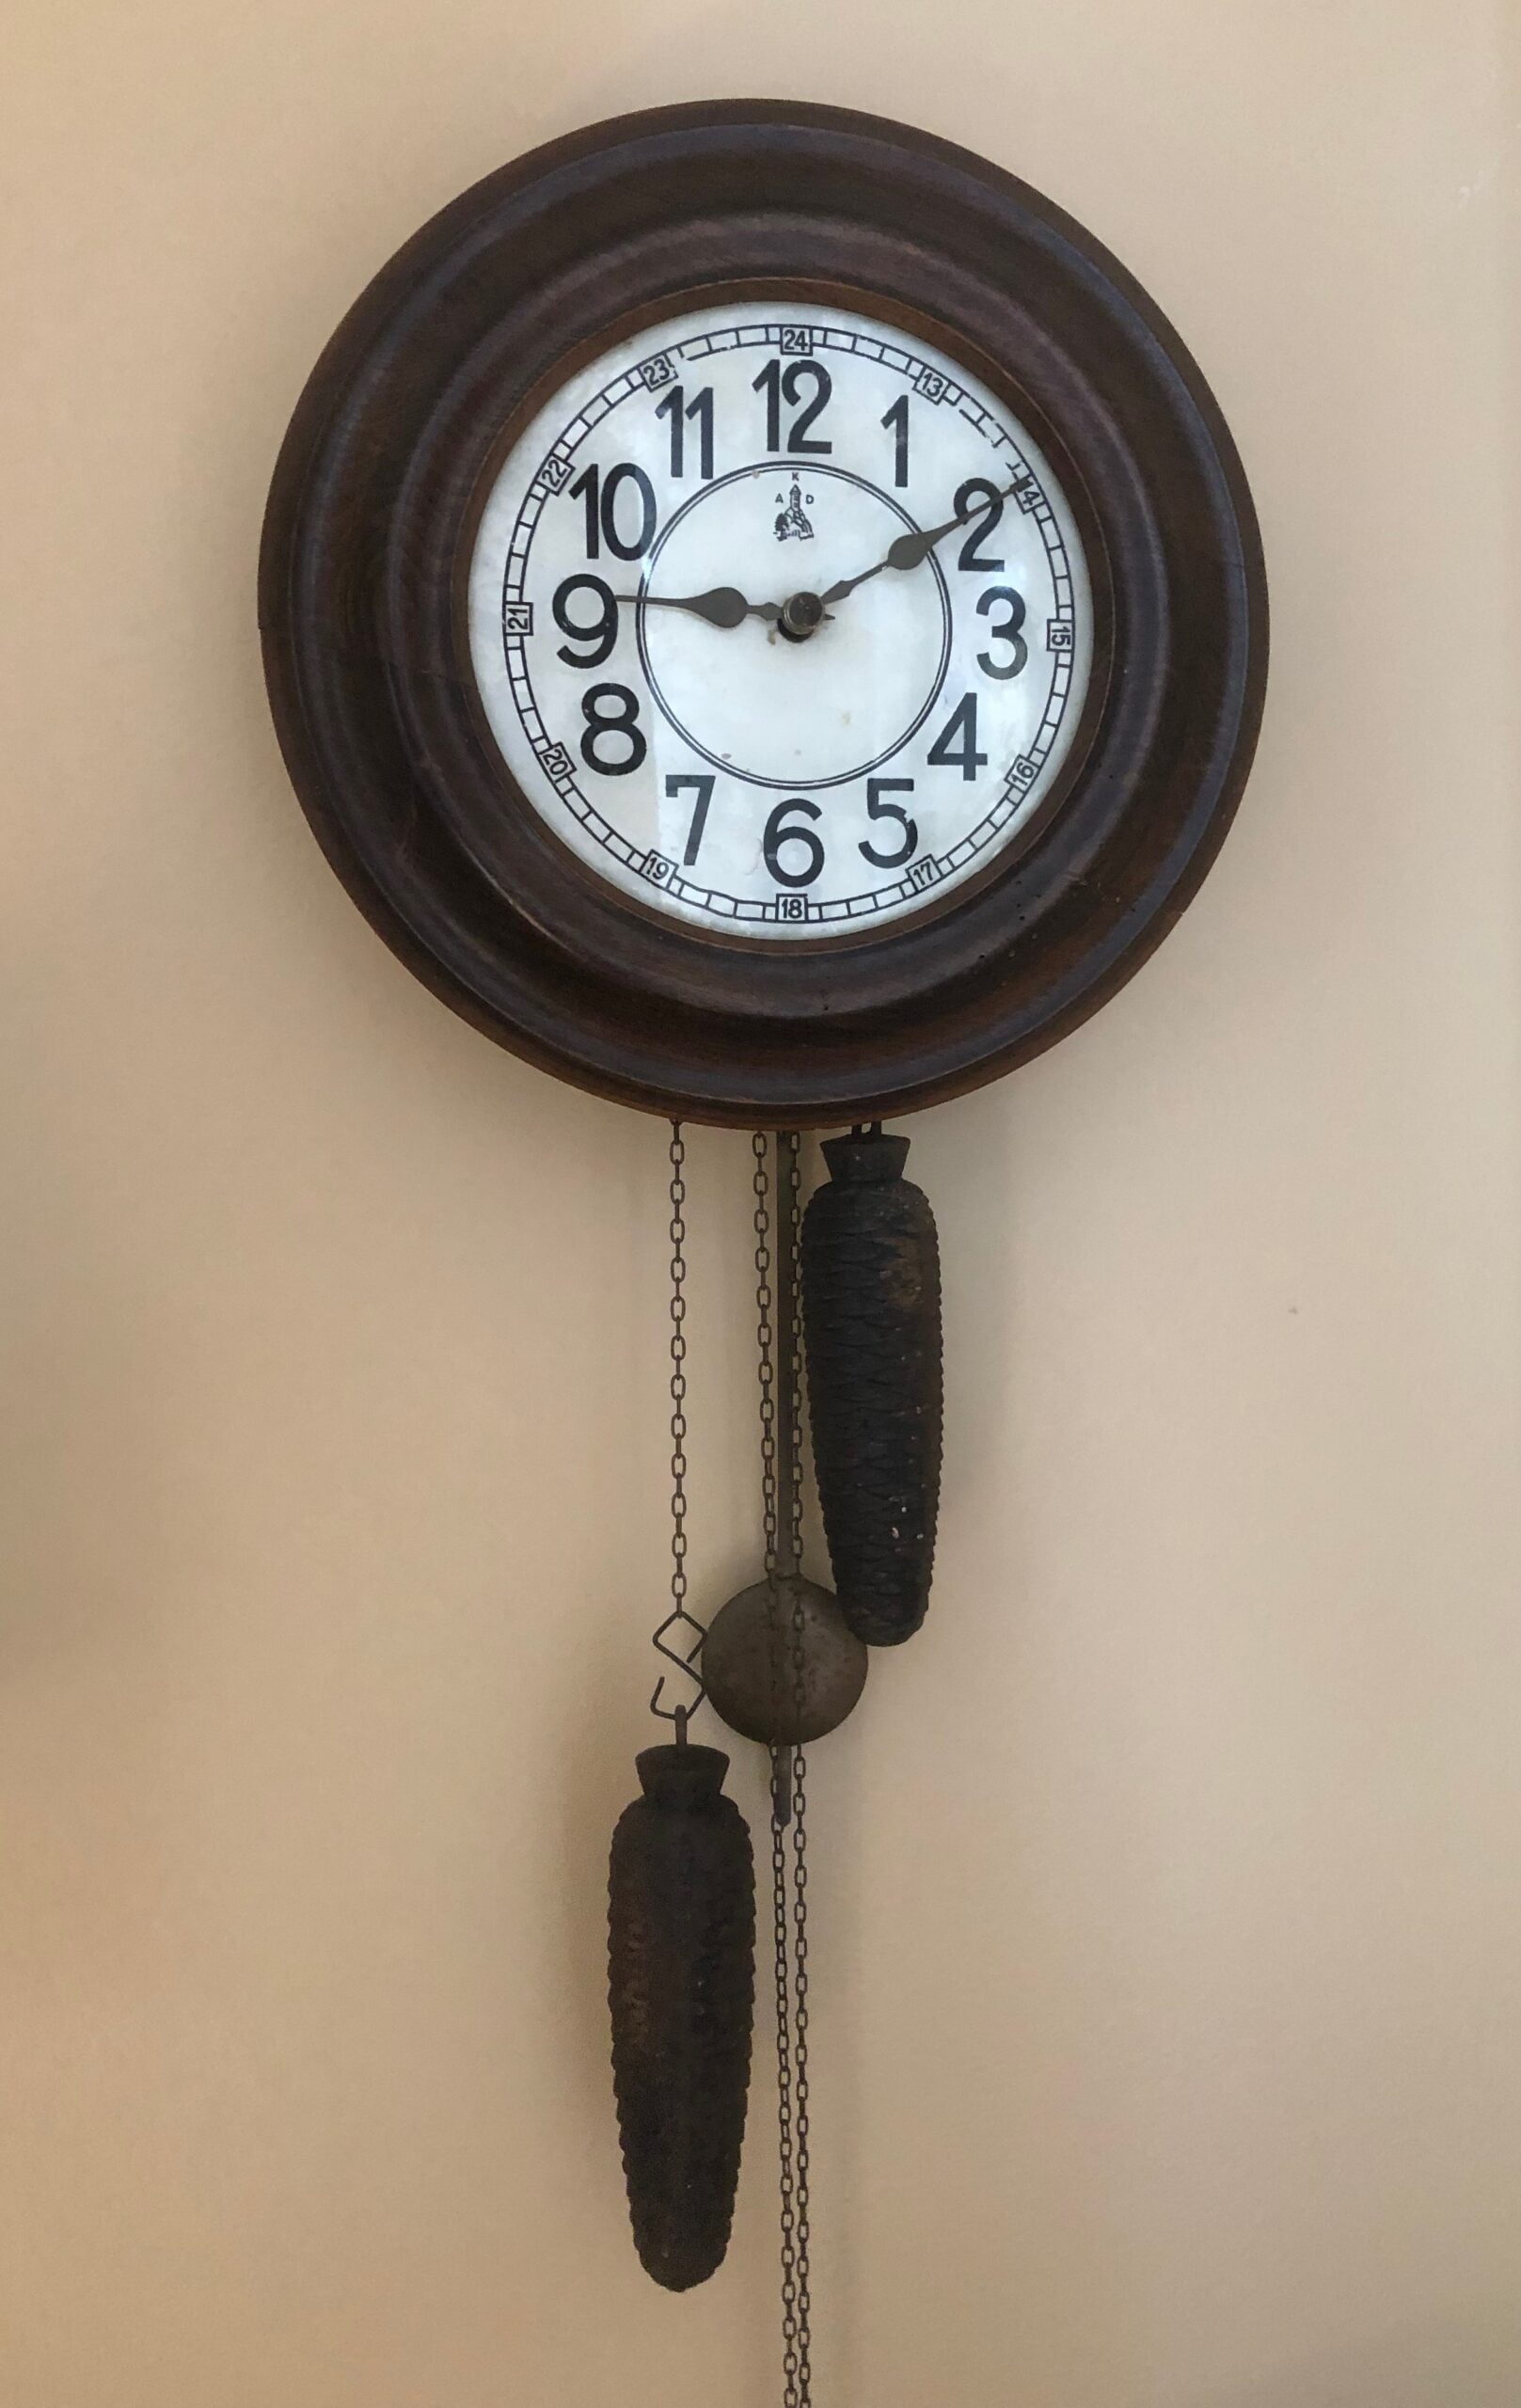 Postman's clock